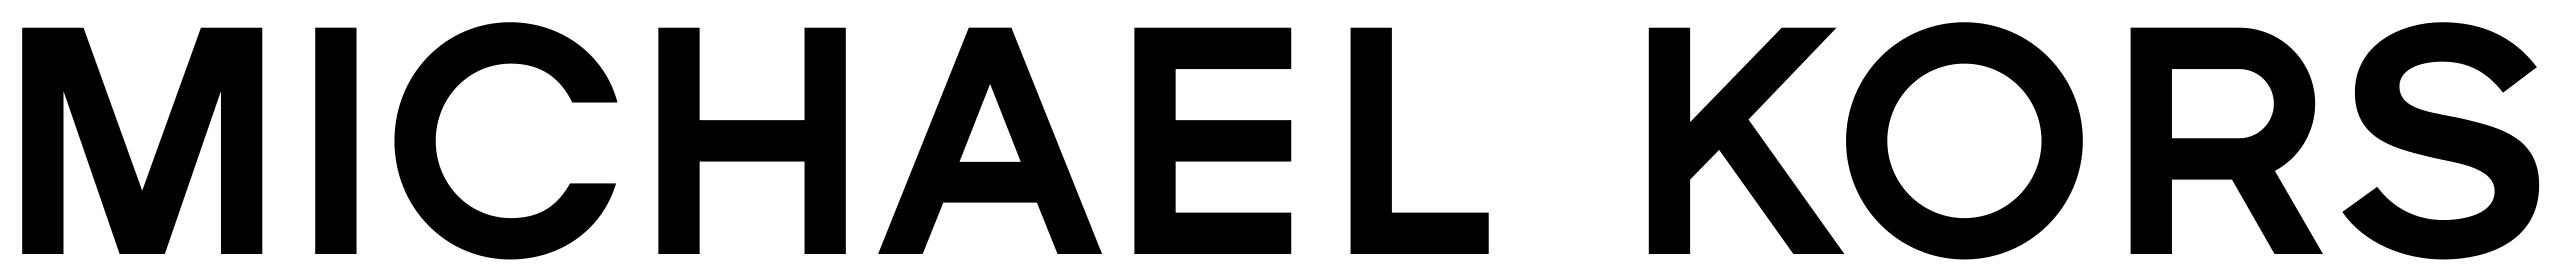 Michael_Kors_Logo.svg 2